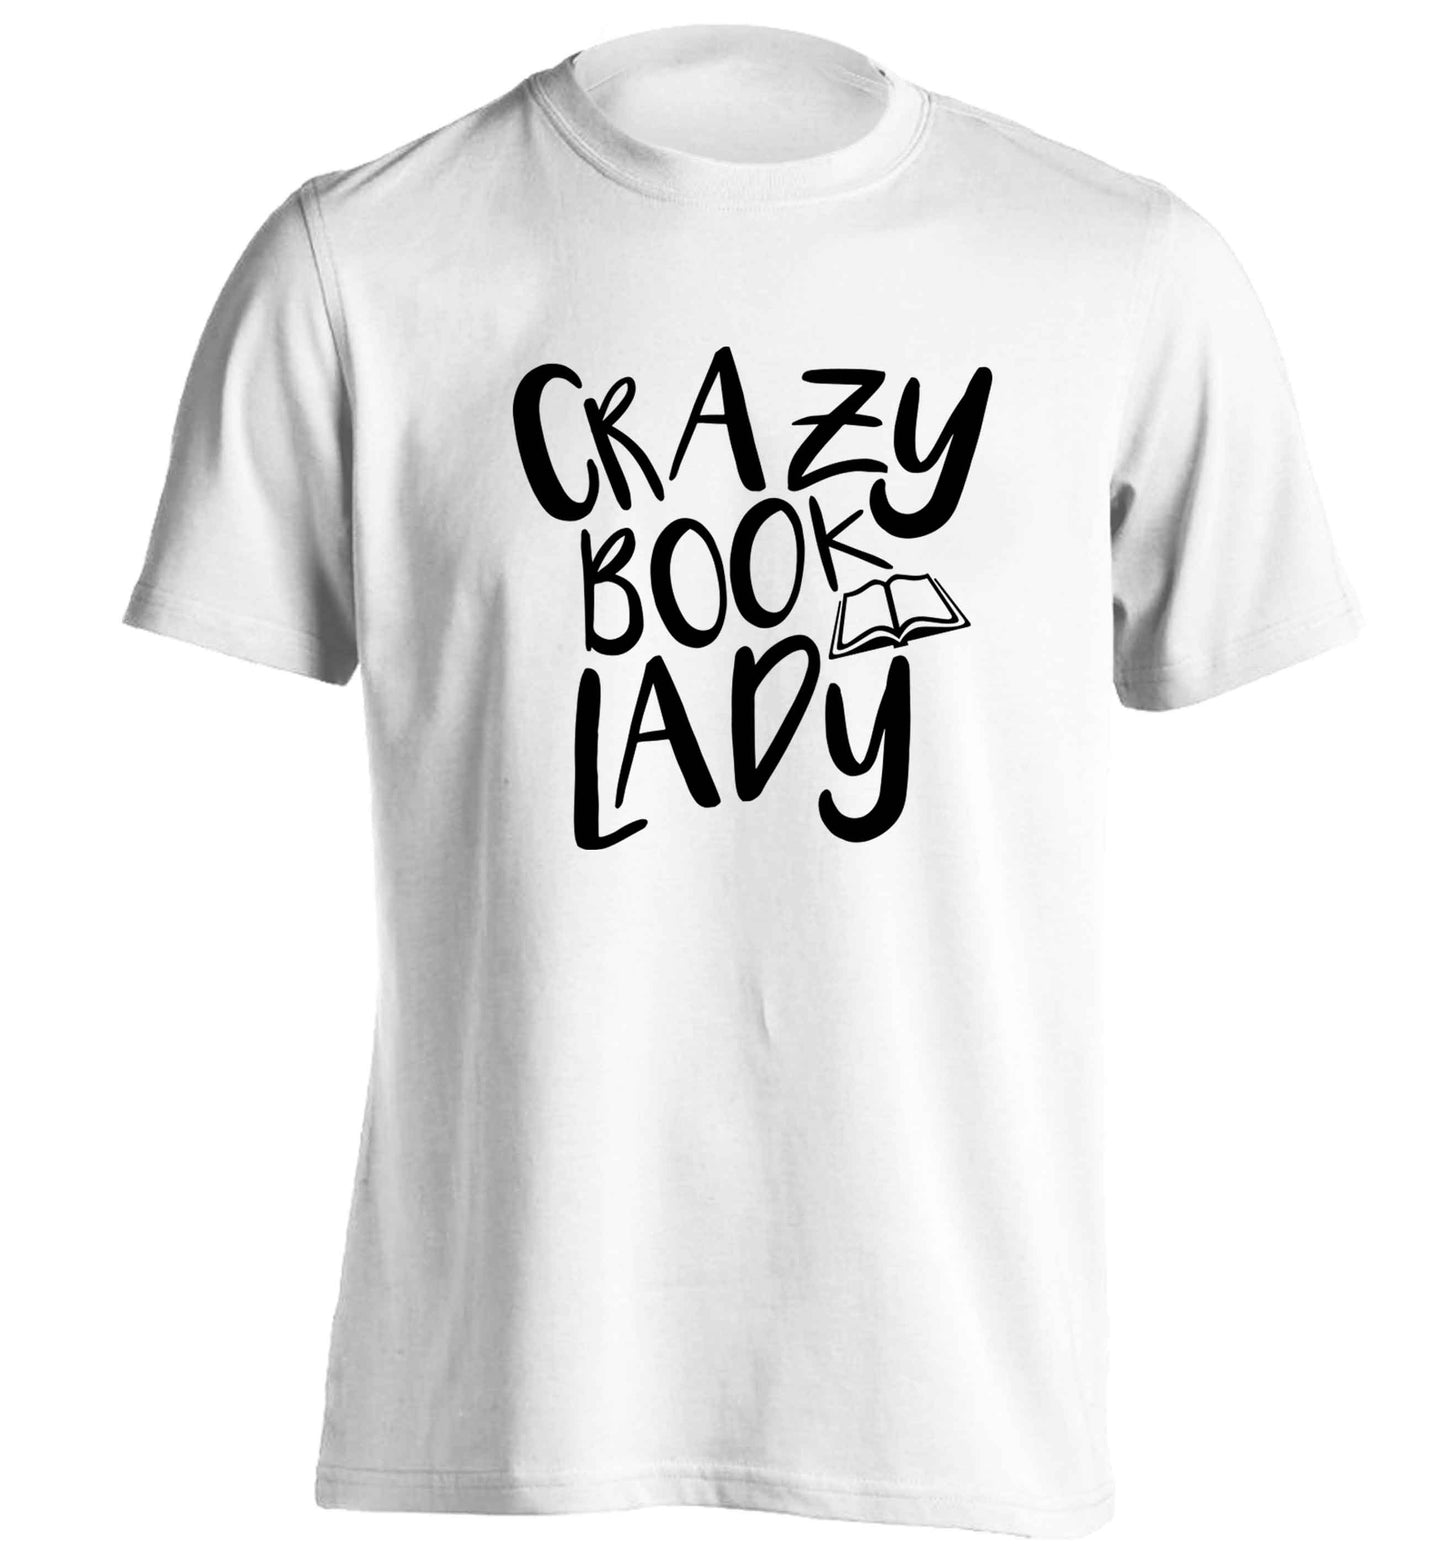 Crazy book lady adults unisex white Tshirt 2XL